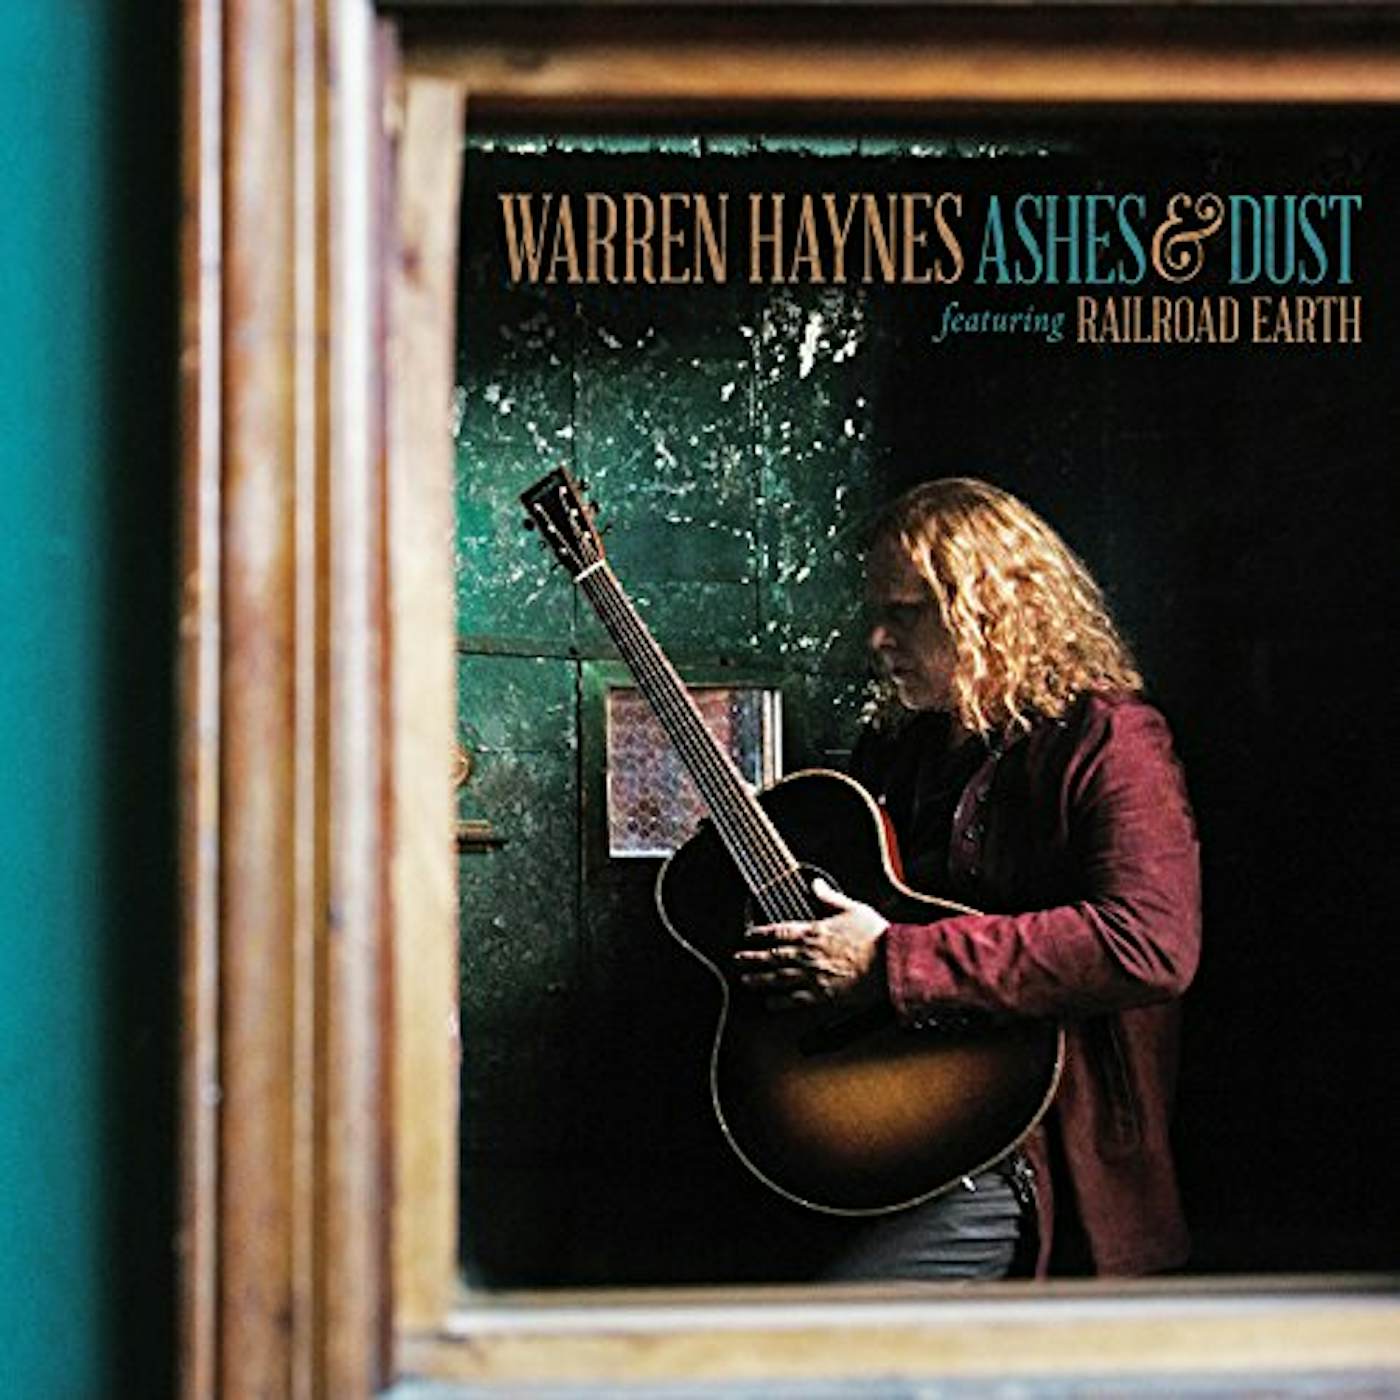 Warren Haynes ASHES & DUST (FEAT RAILROAD EARTH) Vinyl Record